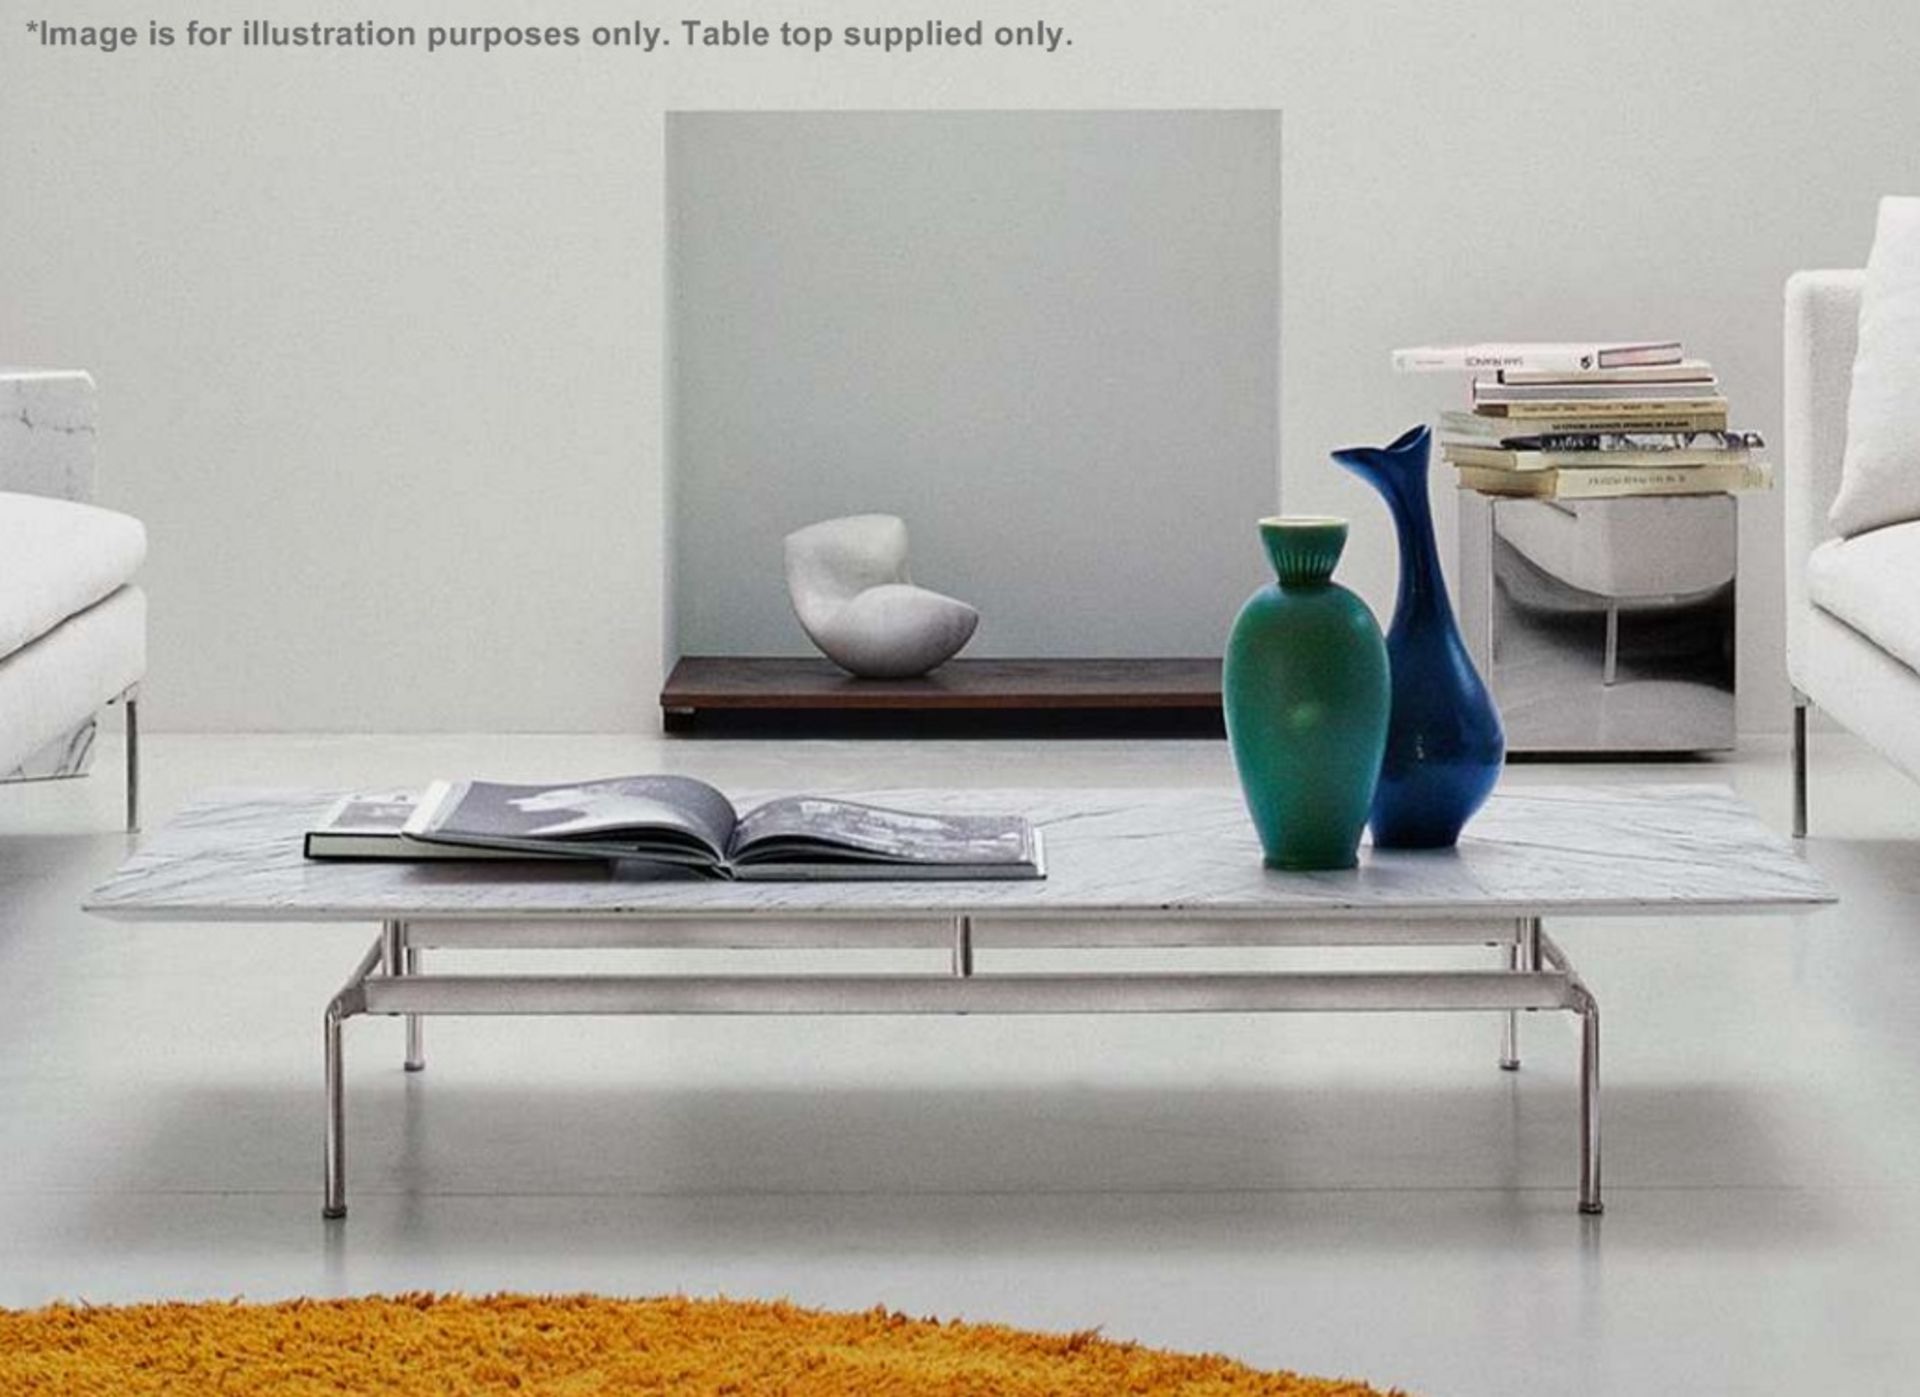 1 x B&B ITALIA "Diesis" Solid Marble Table Top - Dimensions: 190 x 97cm - Ref: 5187080 - Still